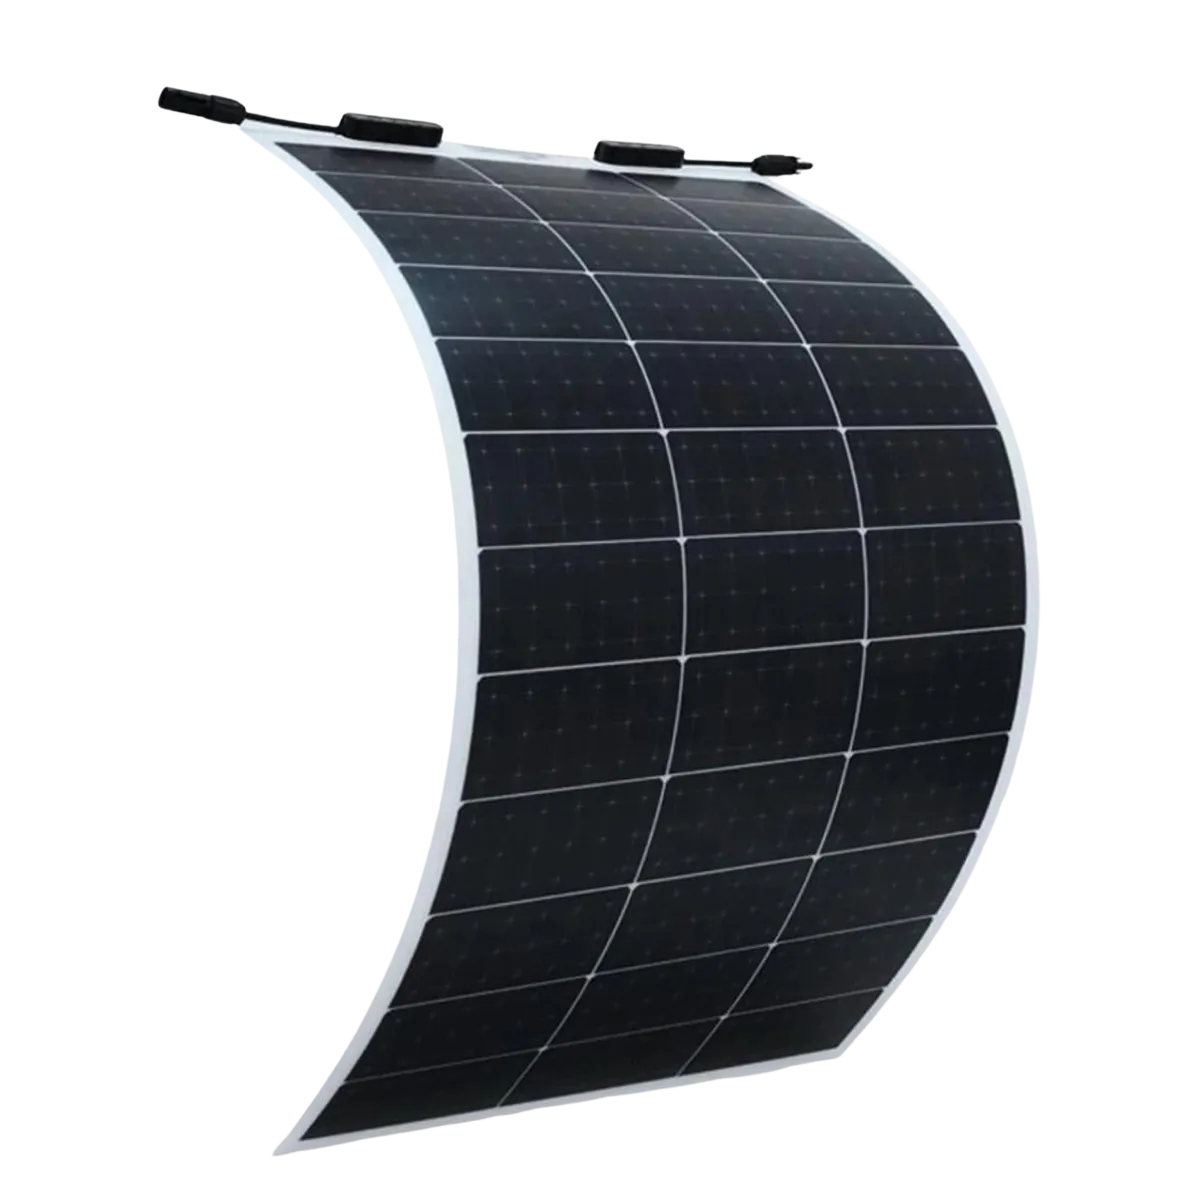 Panel Solar Flexible 100w Monocristalino